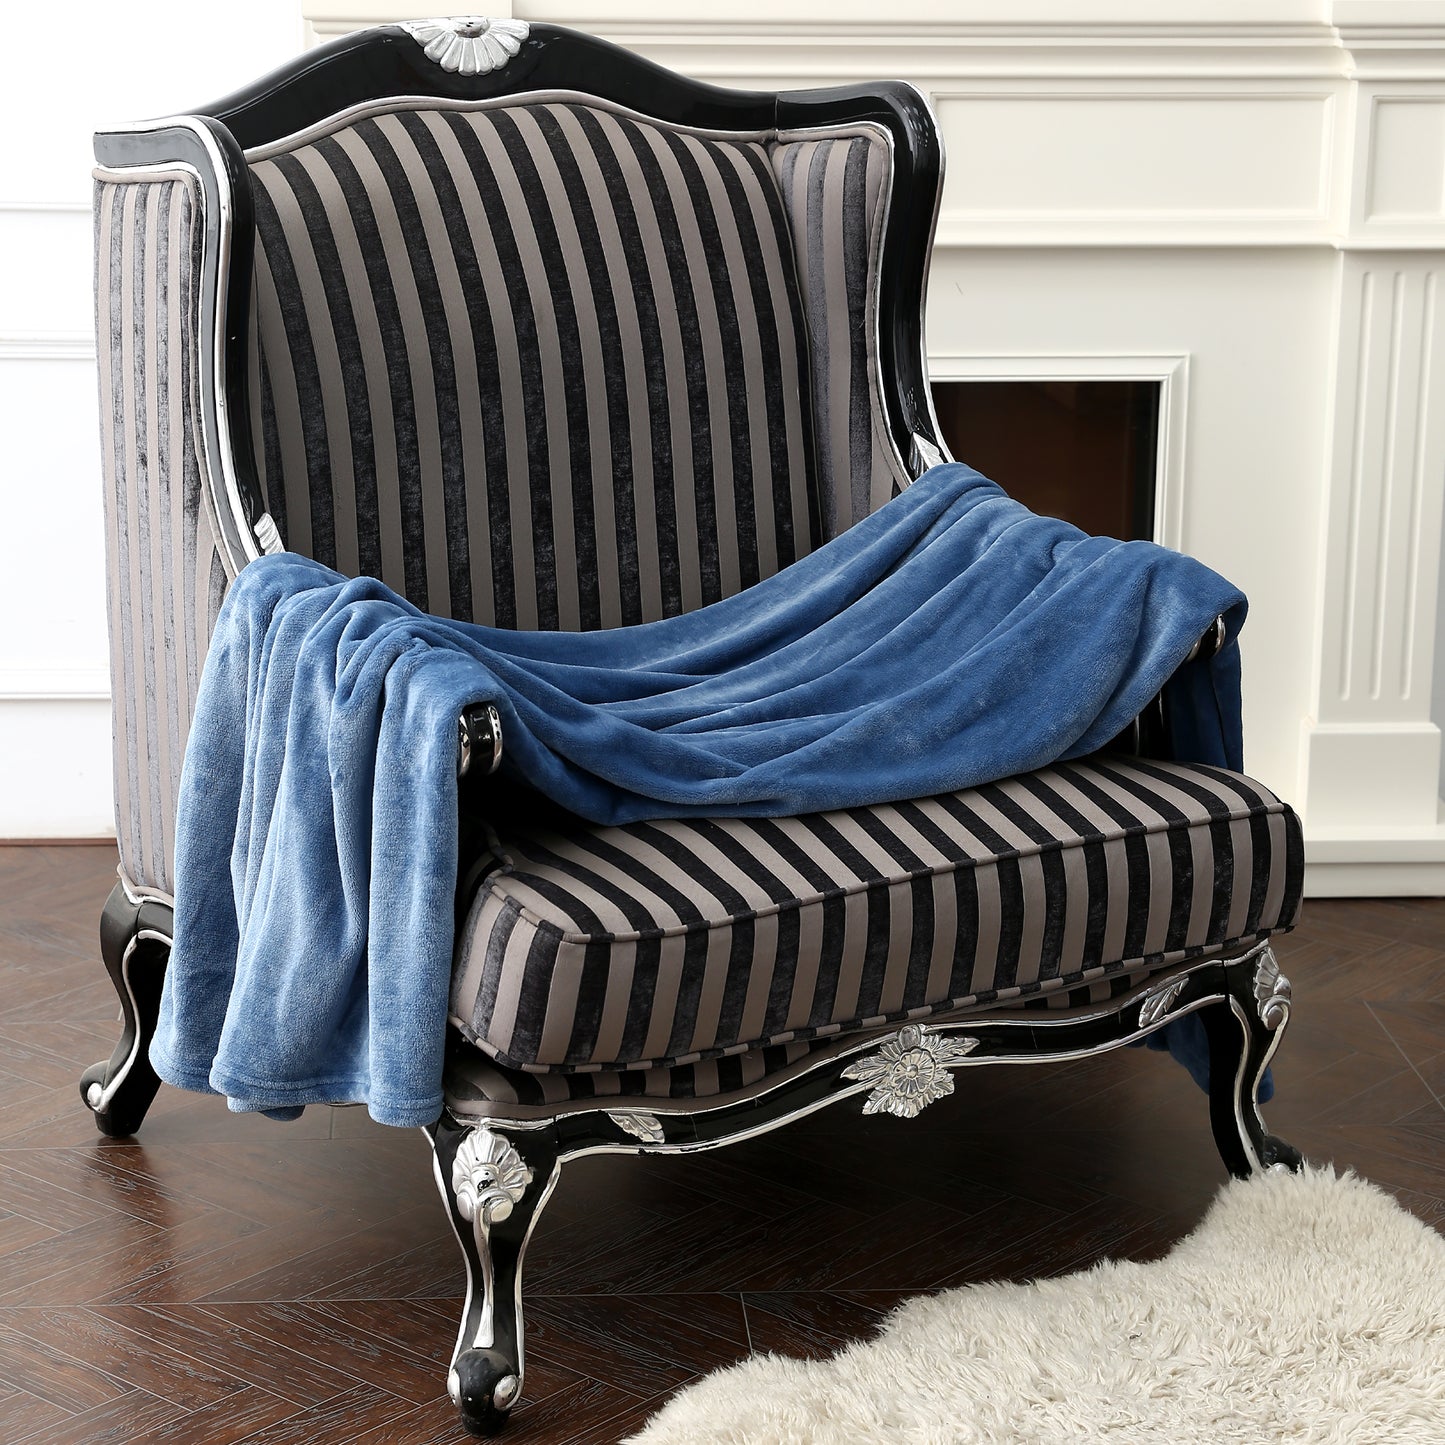 RONGTAI Blue Gray Fleece Throw Blanket for Sofa Bed